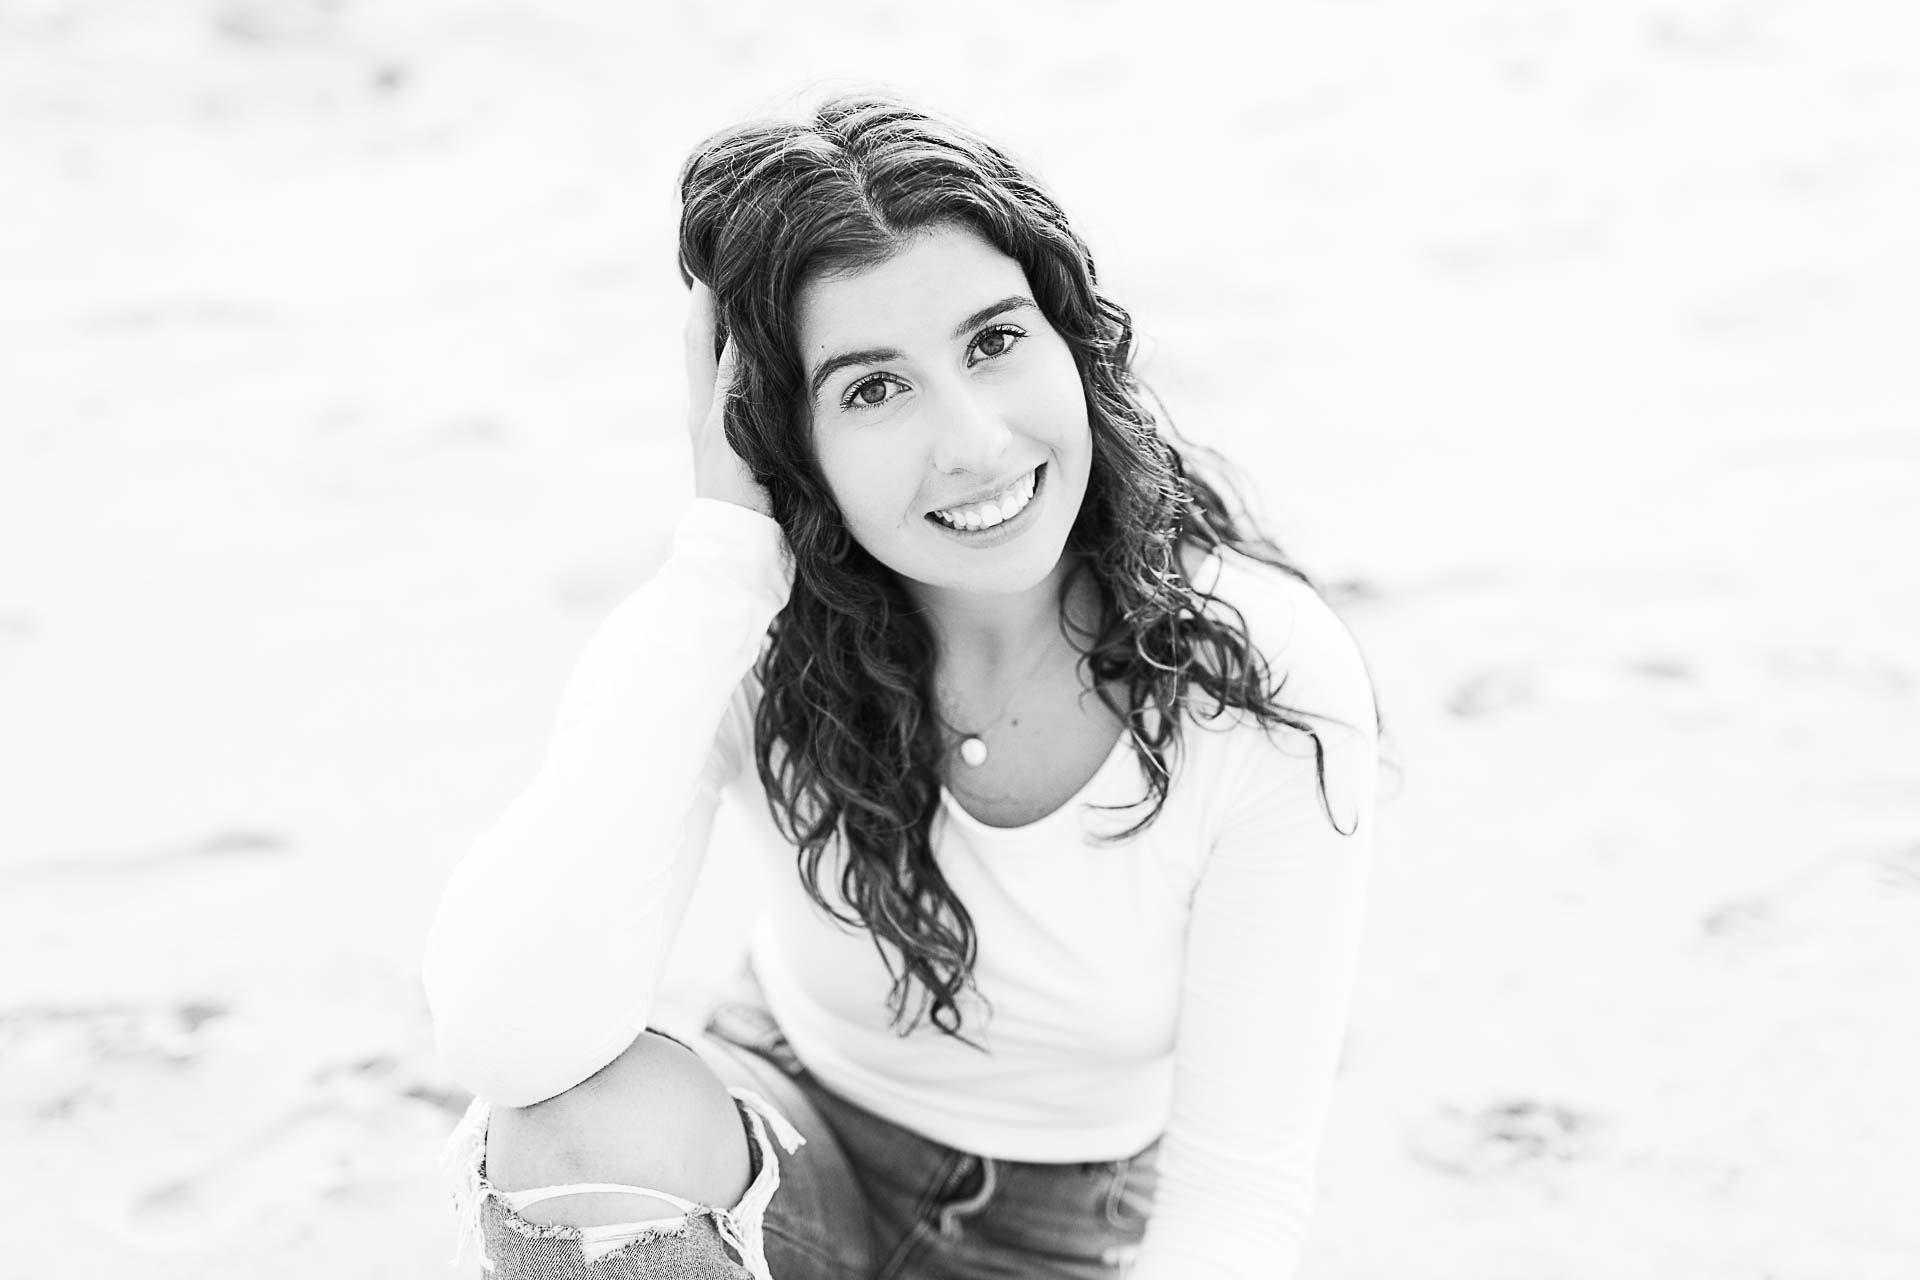 Photo by Hingham Senior Portrait Photographer Christina Runnals | Girl sitting on the beach